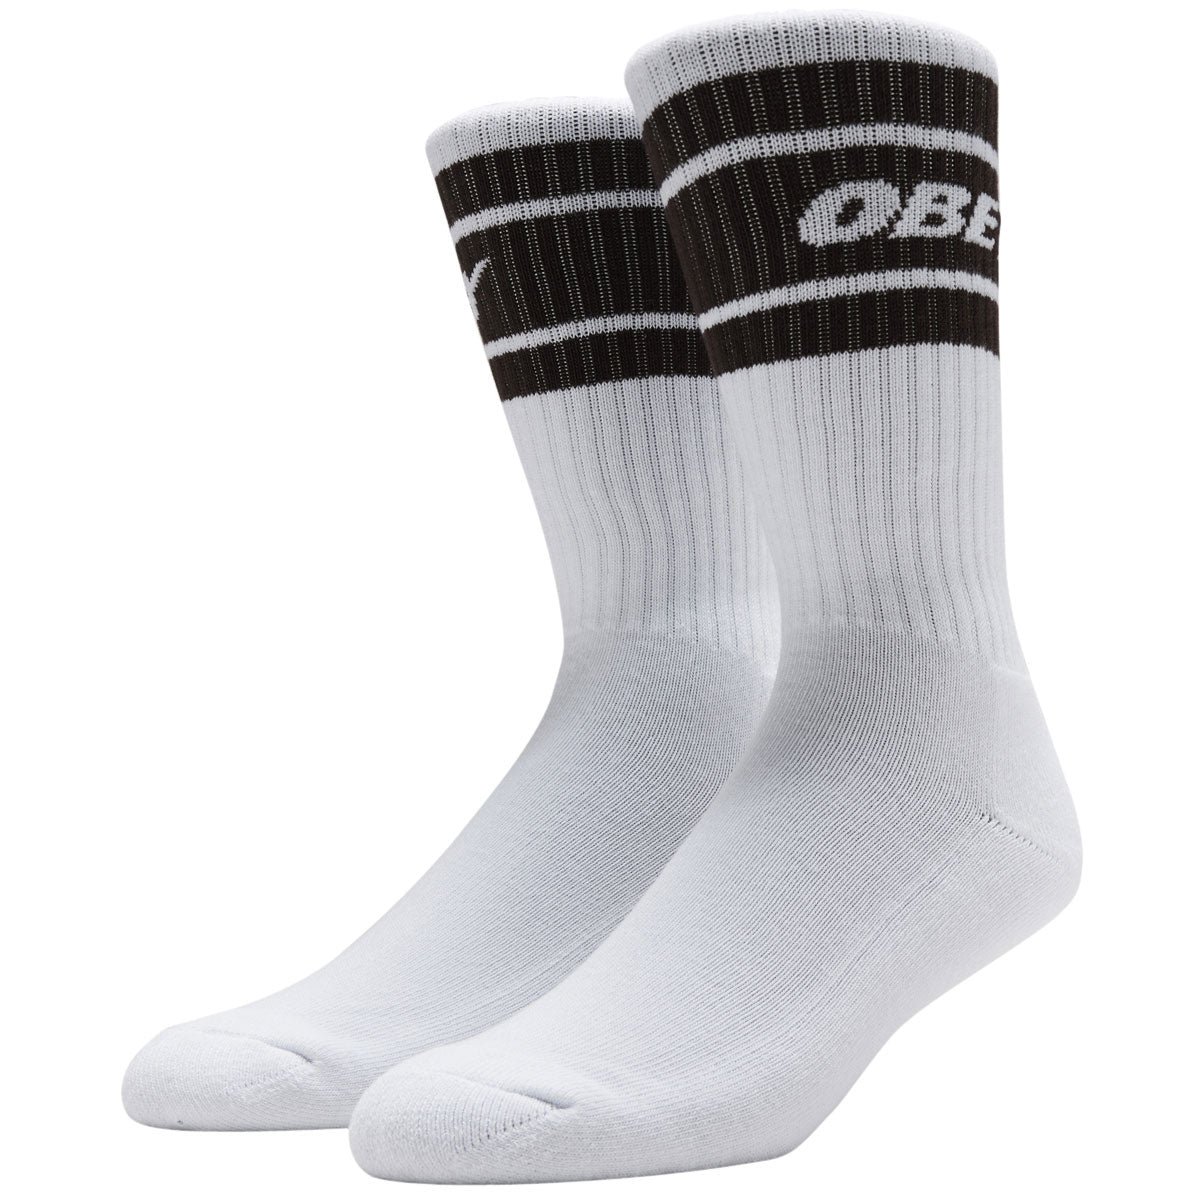 Obey Cooper II Socks - White/Java Brown image 1